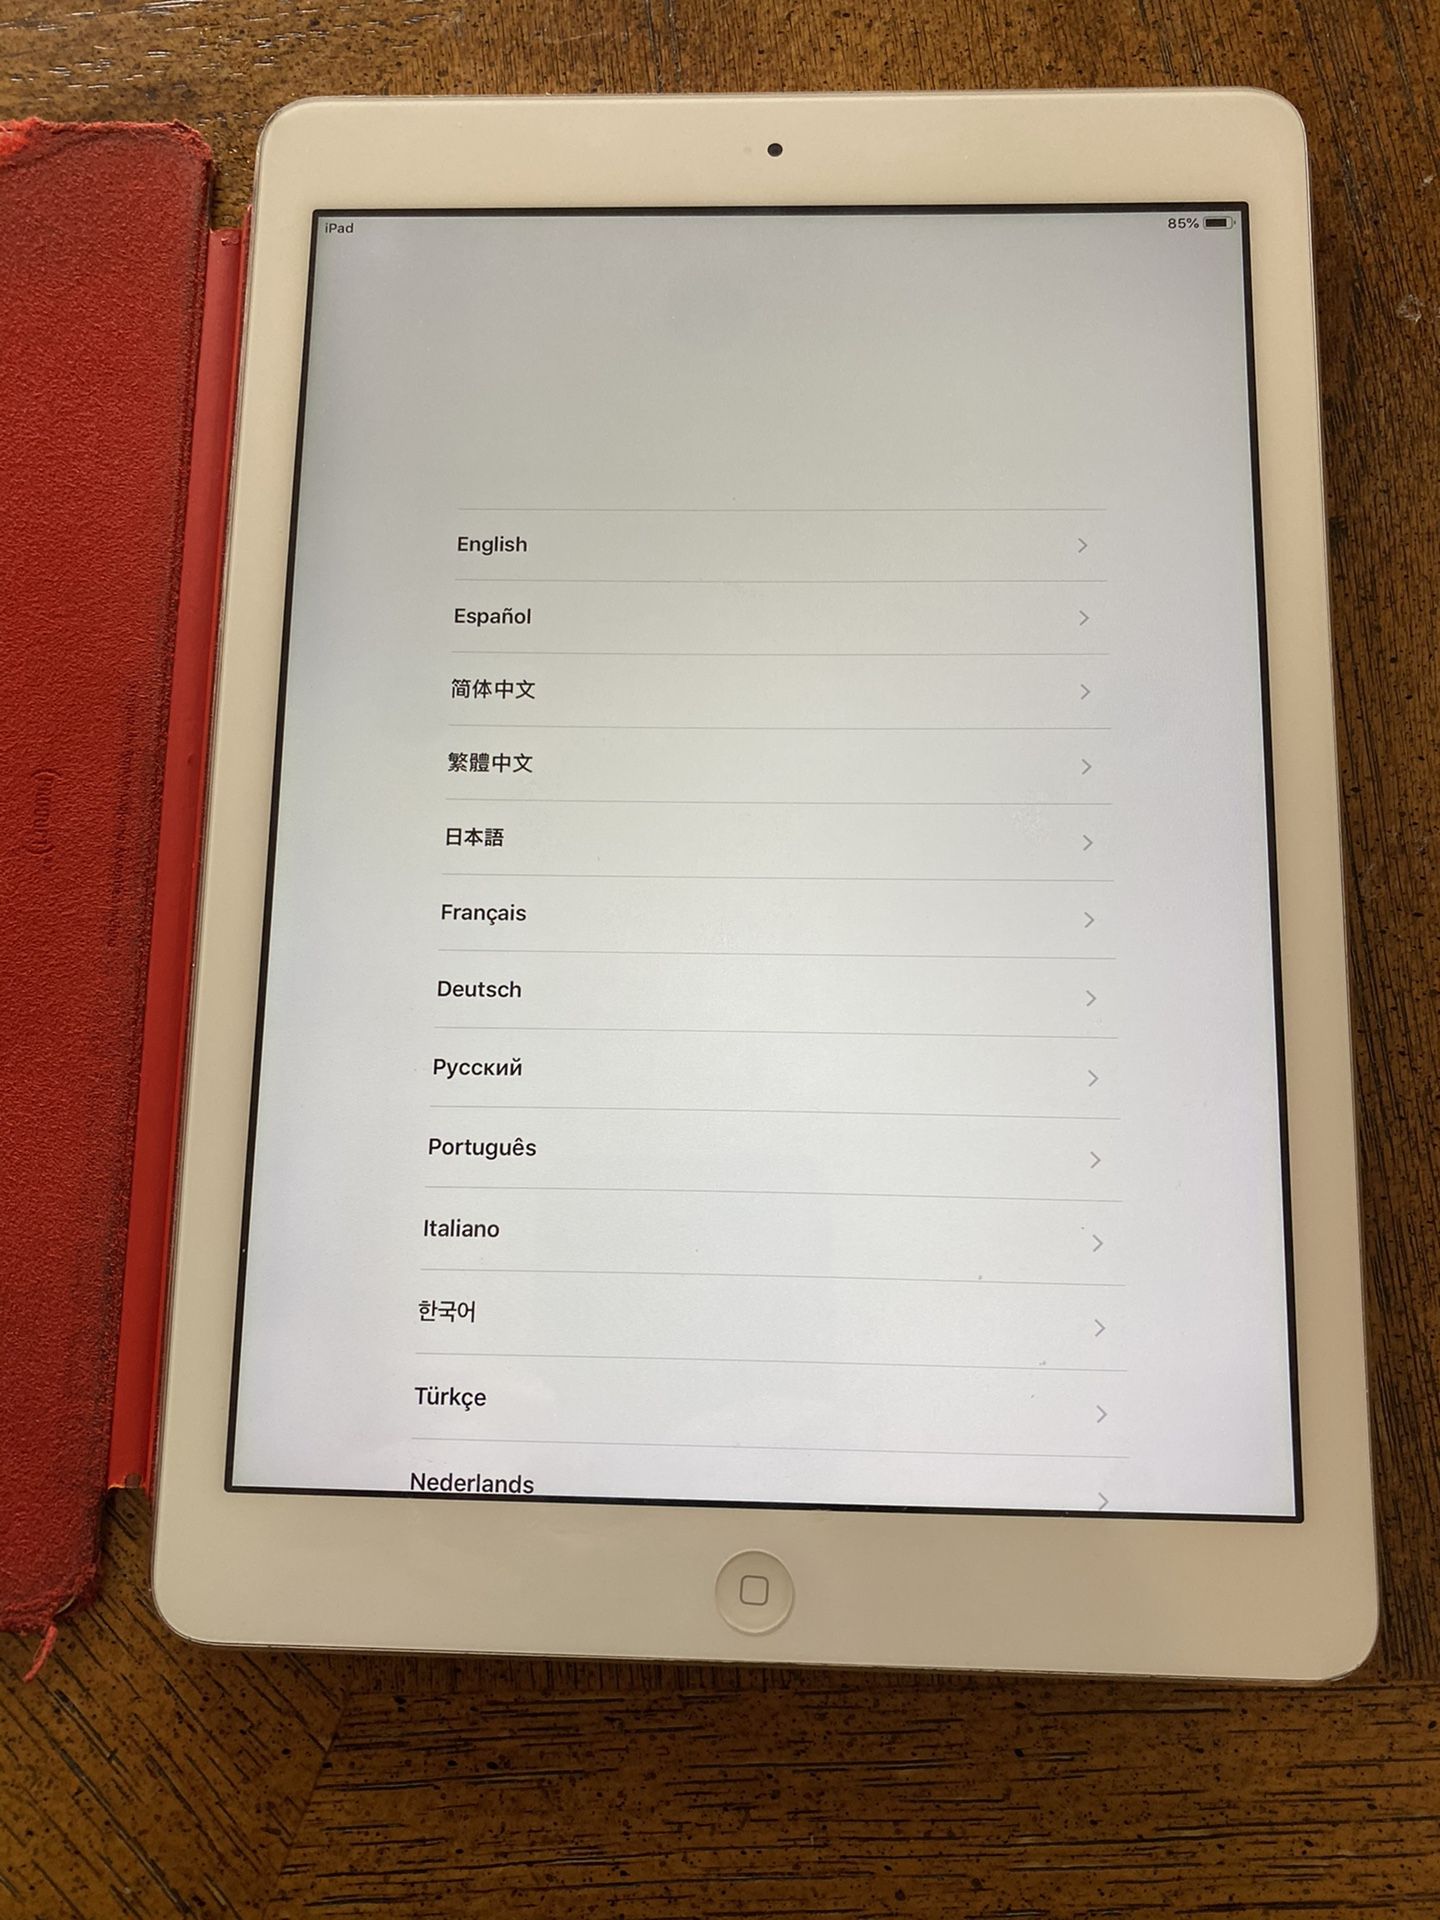 Apple iPad Air 1st Generation Model A1474, 16GB, Gray, WiFi